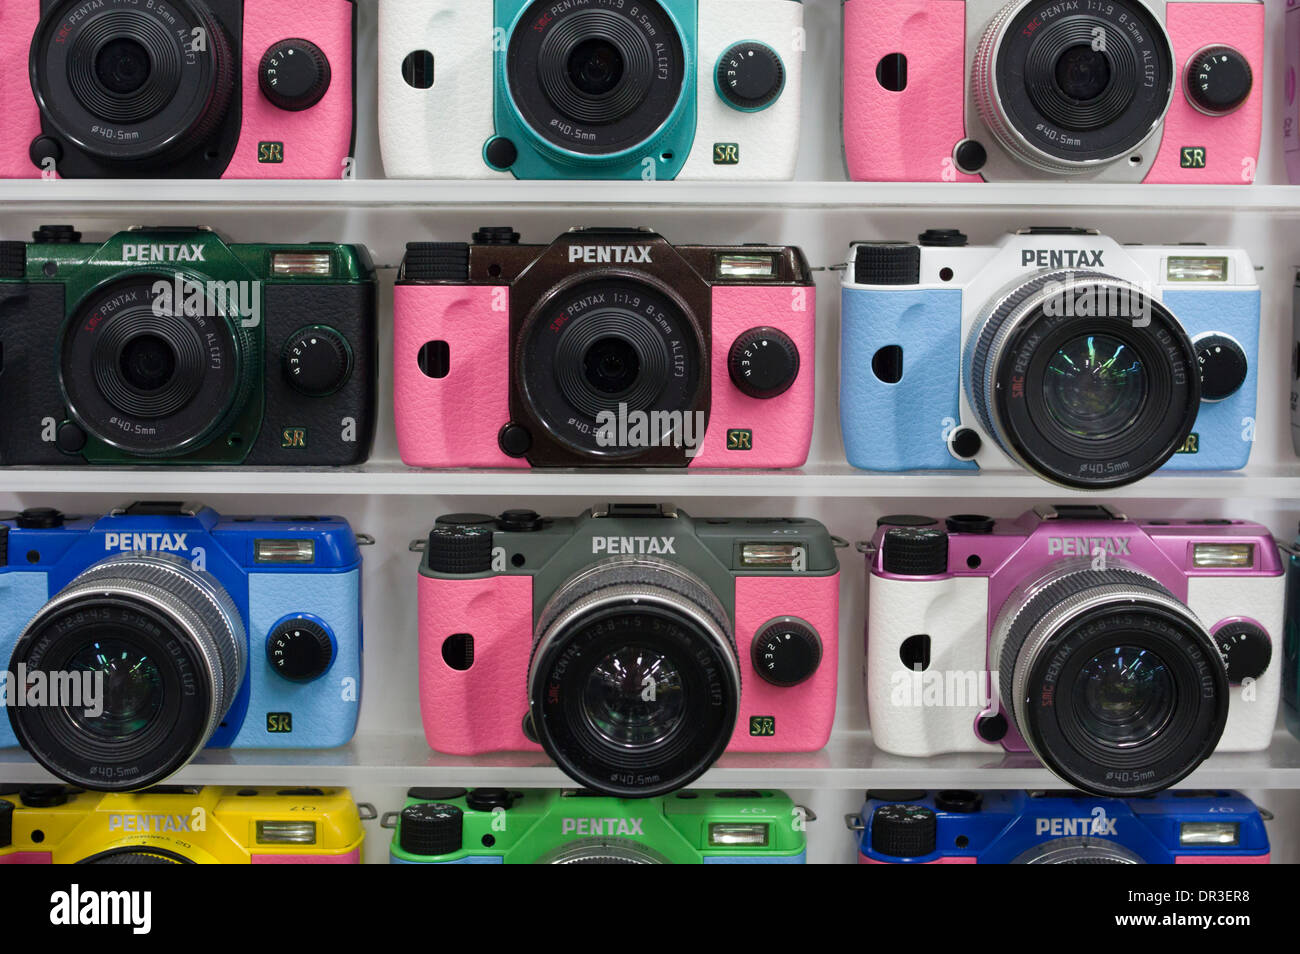 Pentax Q10 Cameras on display in Yodobashi Camera electronics